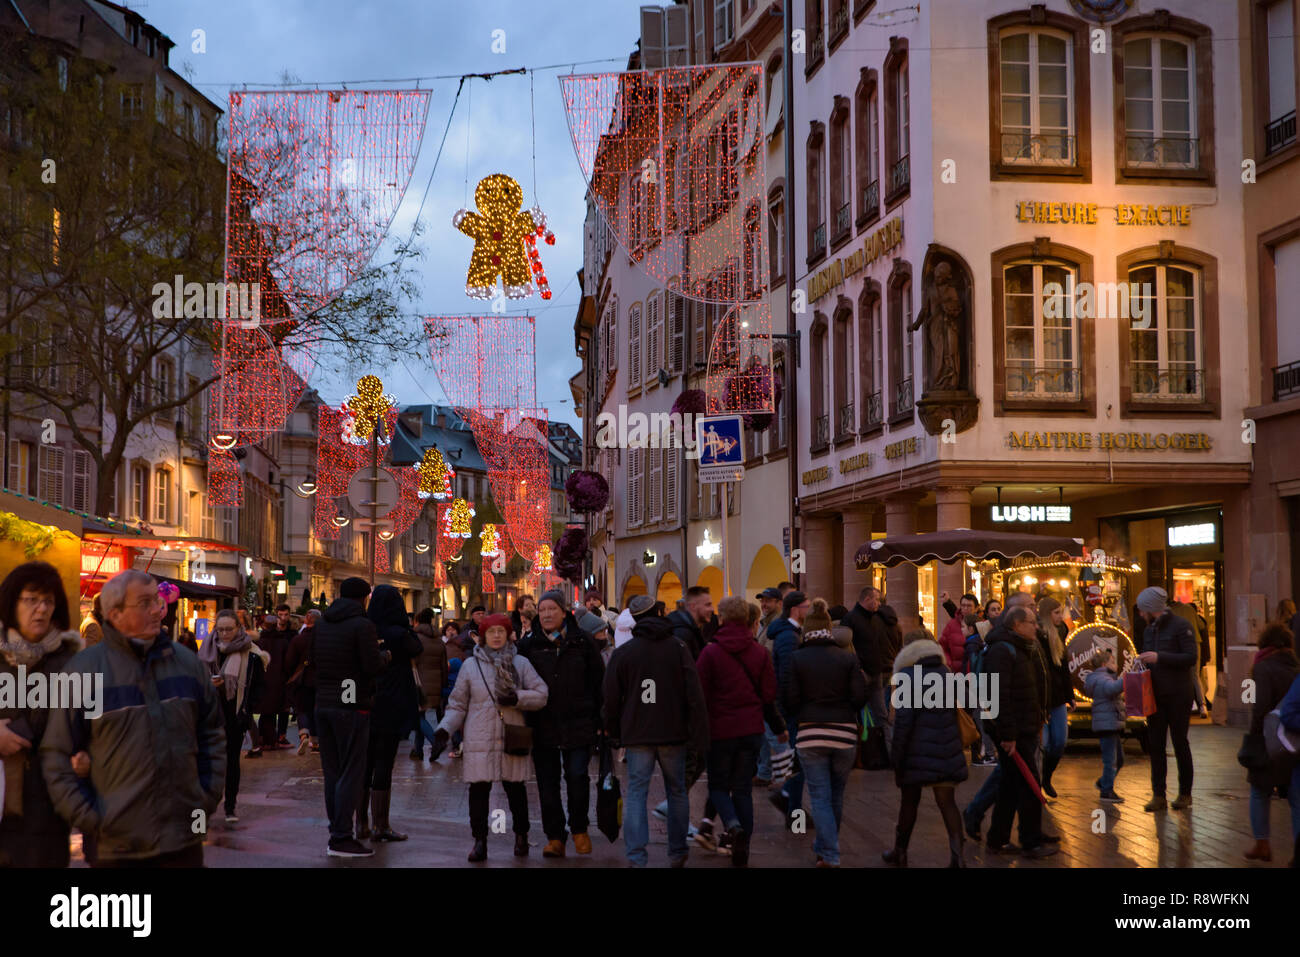 2018 Christmas market in Strasbourg, the Capital de Noel in France. A terrorist attack happened on 11th December. Stock Photo